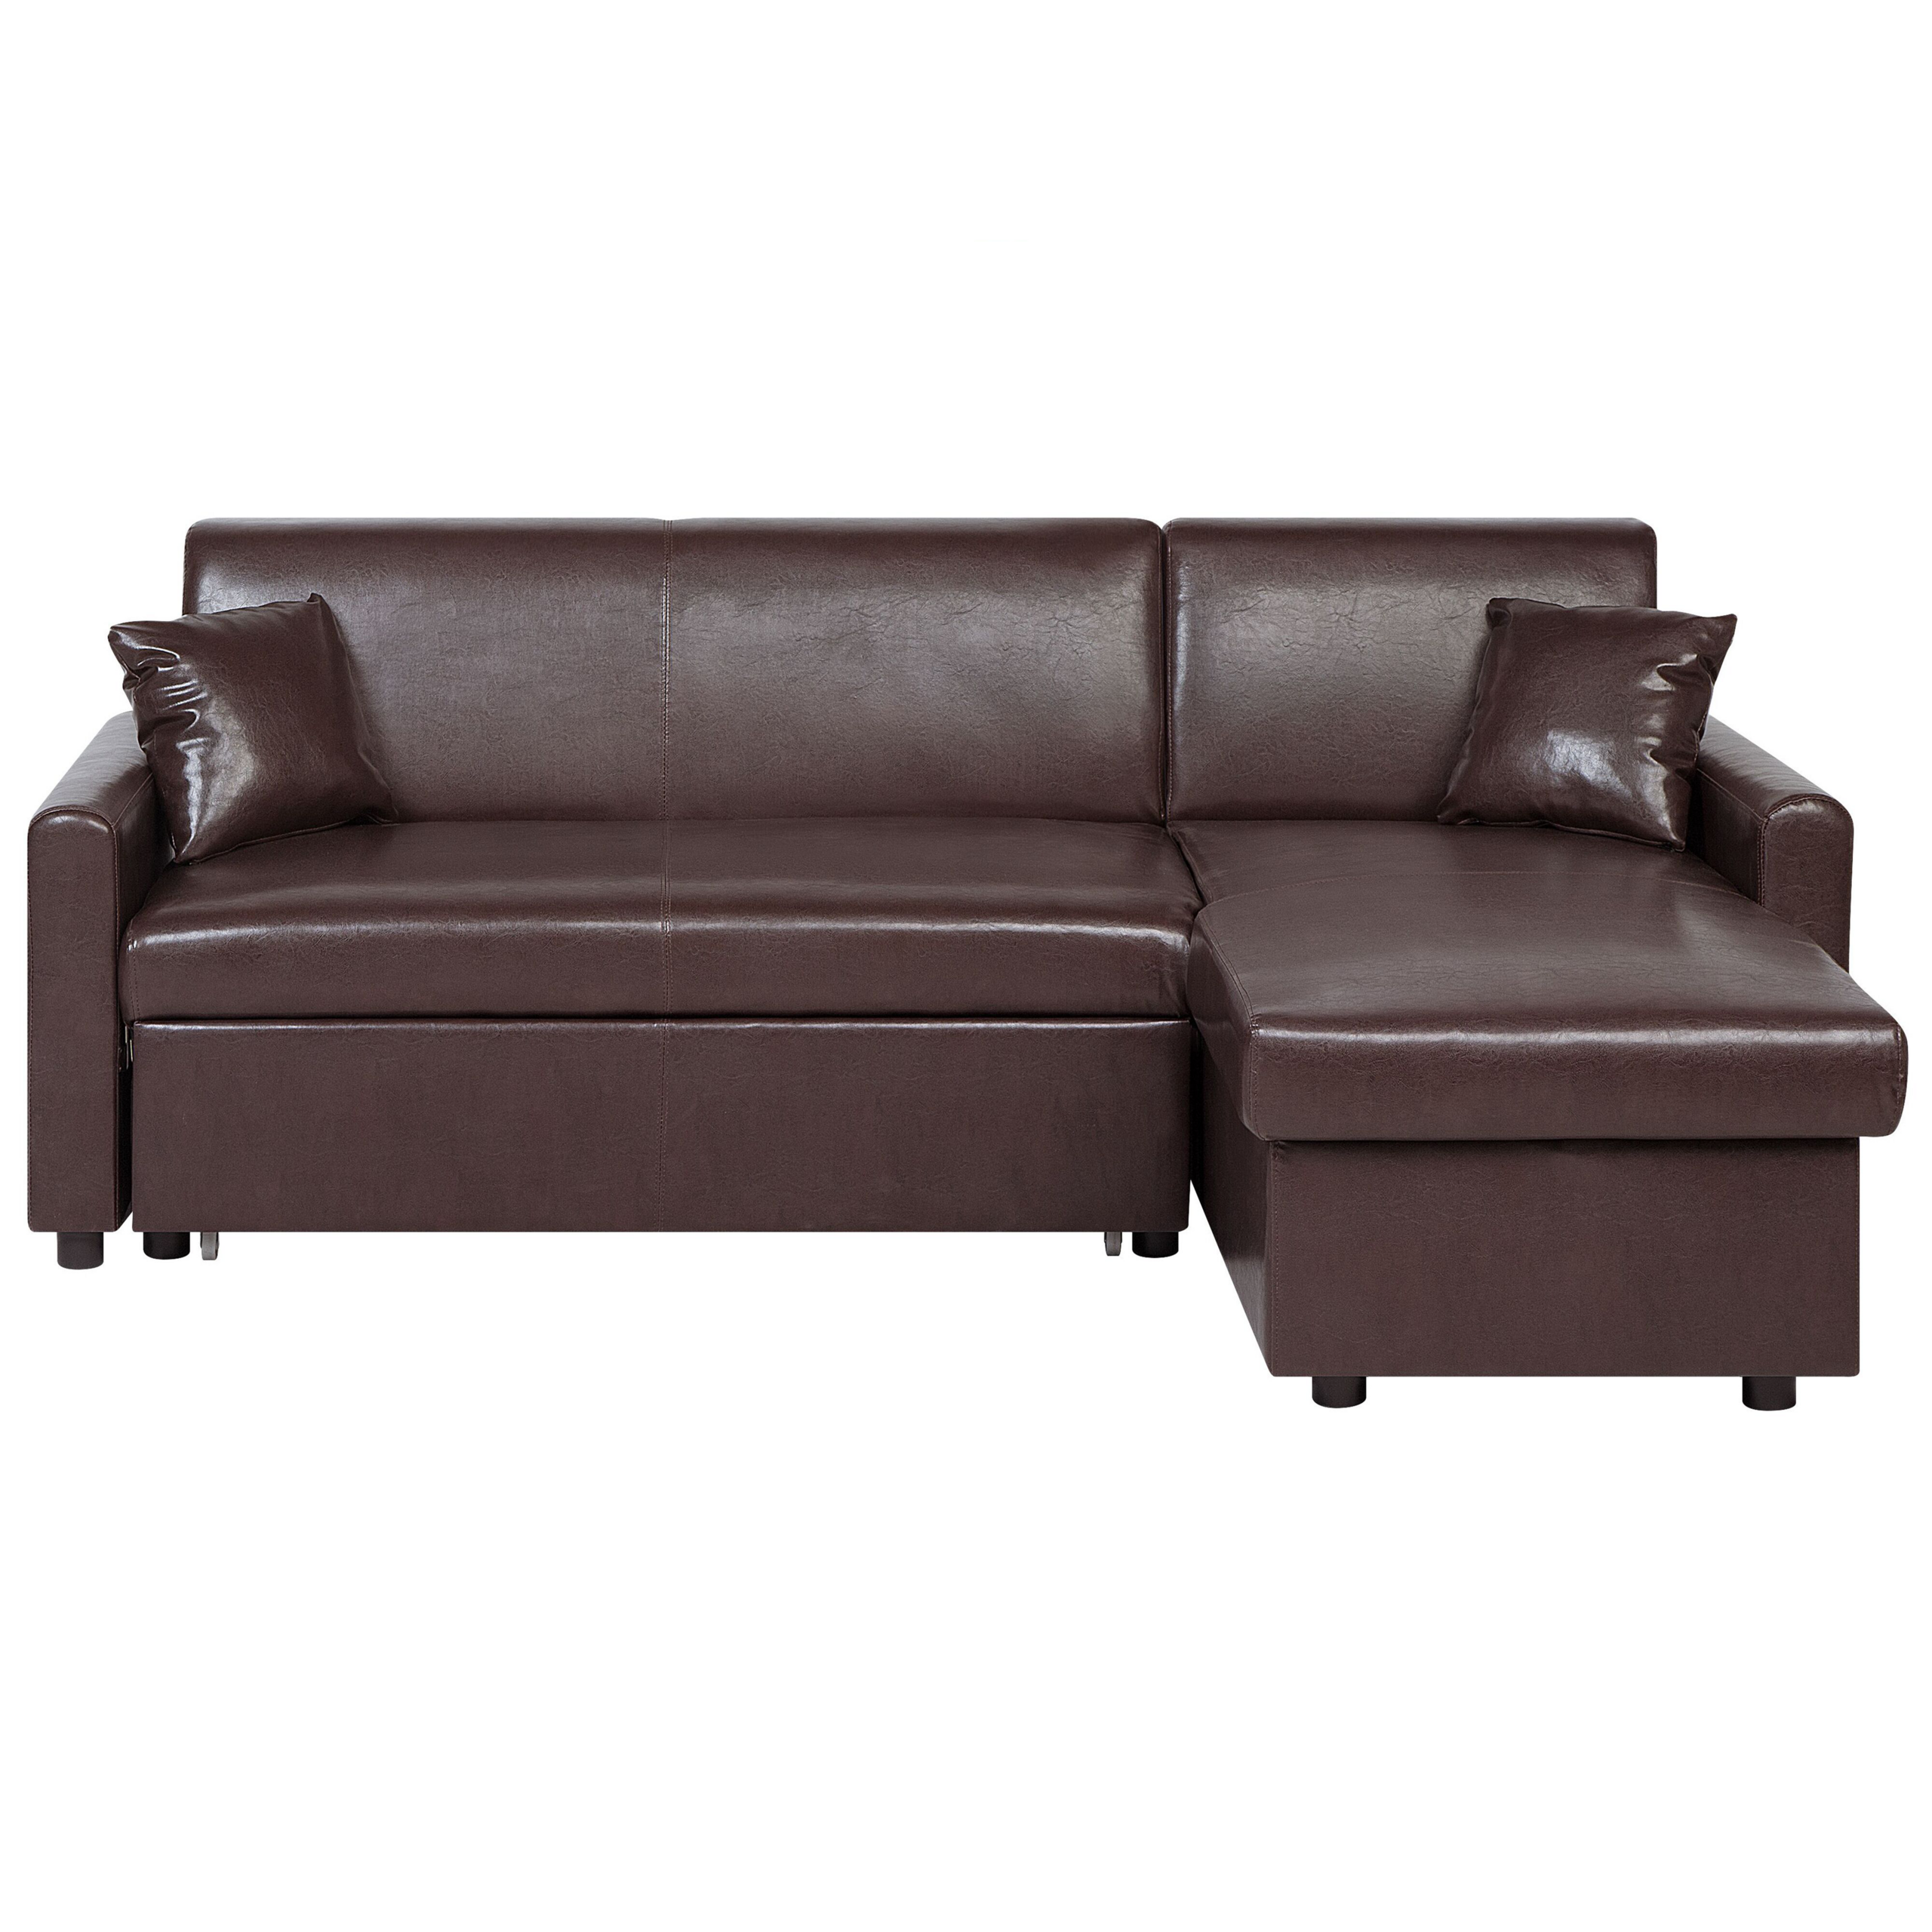 Beliani Corner Sofa Bed Dark Brown Faux Leather 3 Seater Left Hand Orientation with Storage